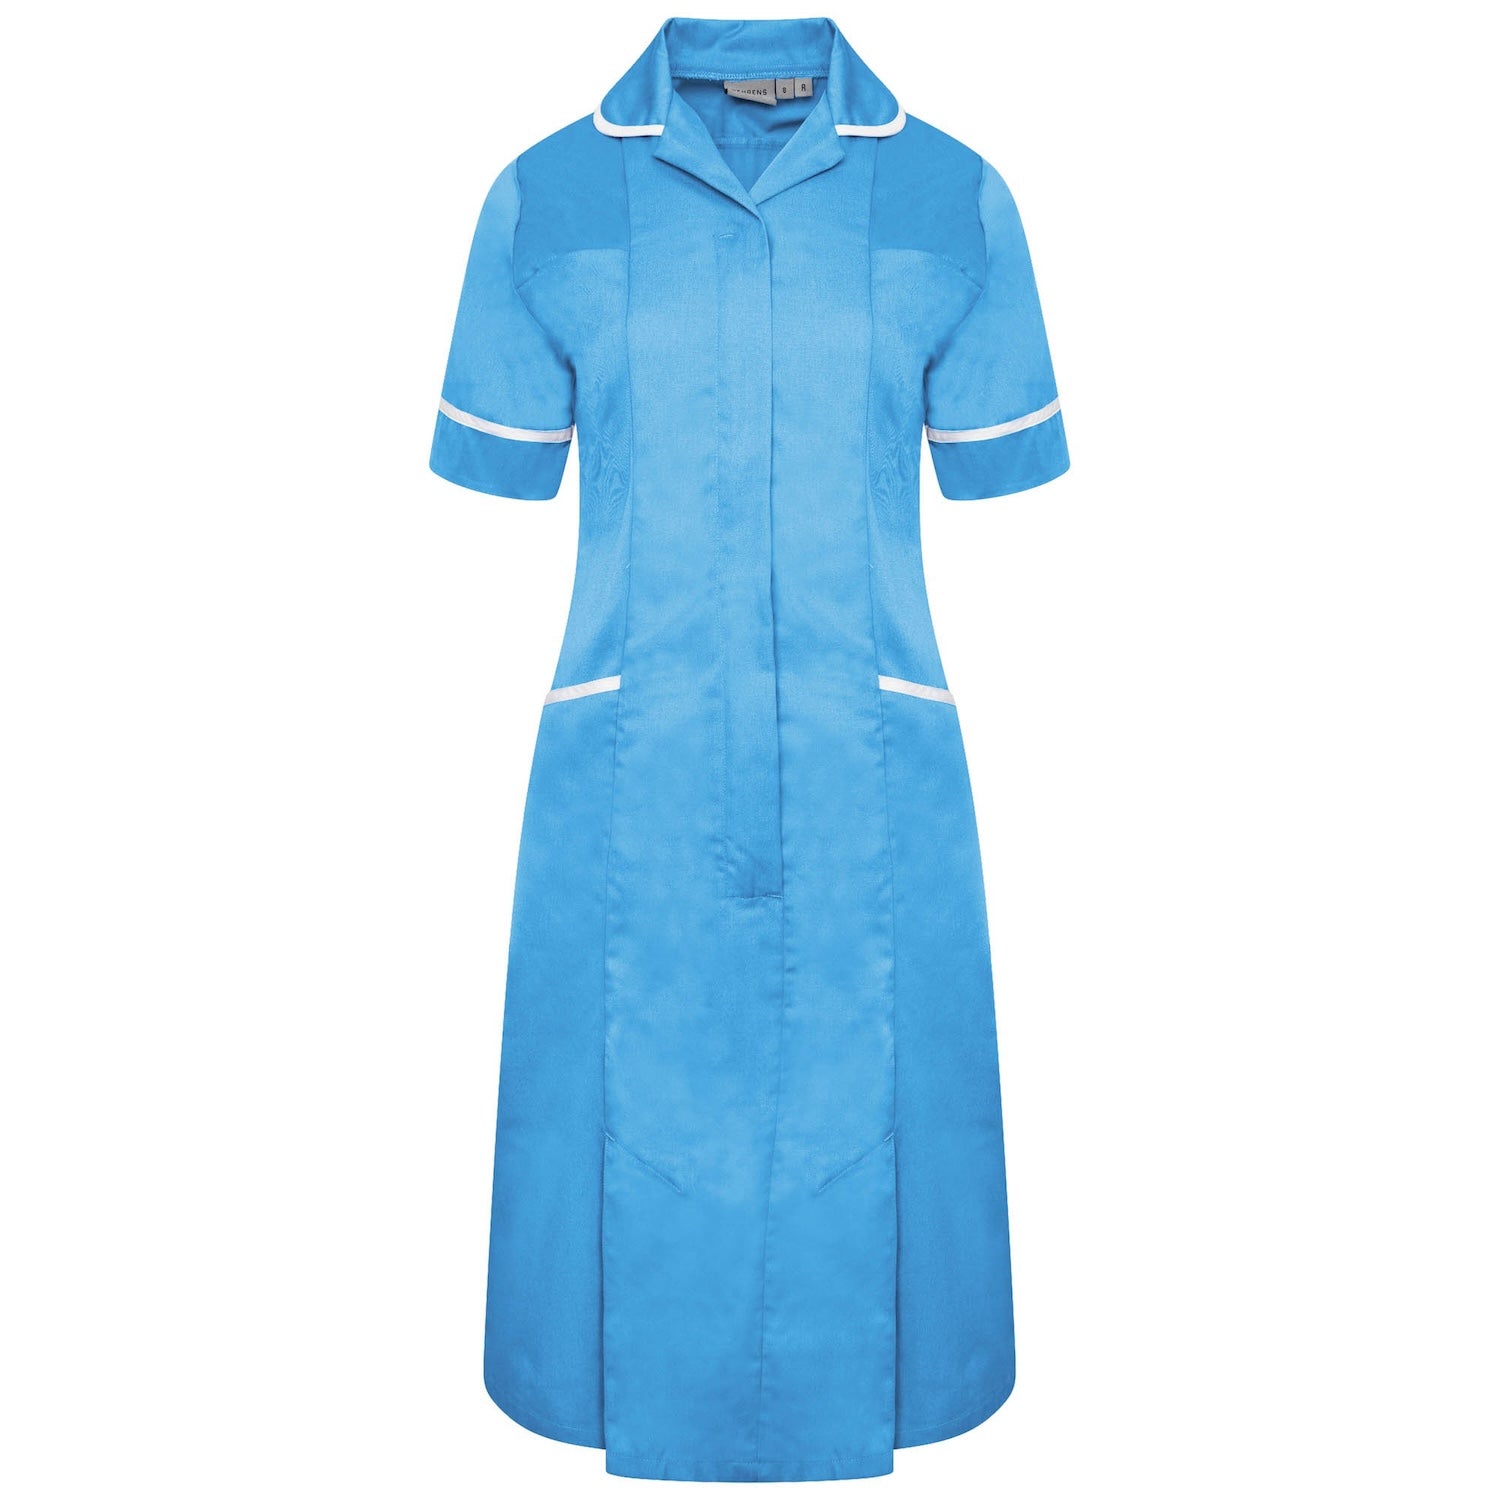 Ladies Healthcare Dress | Round Collar | Hospital Blue/White Trim